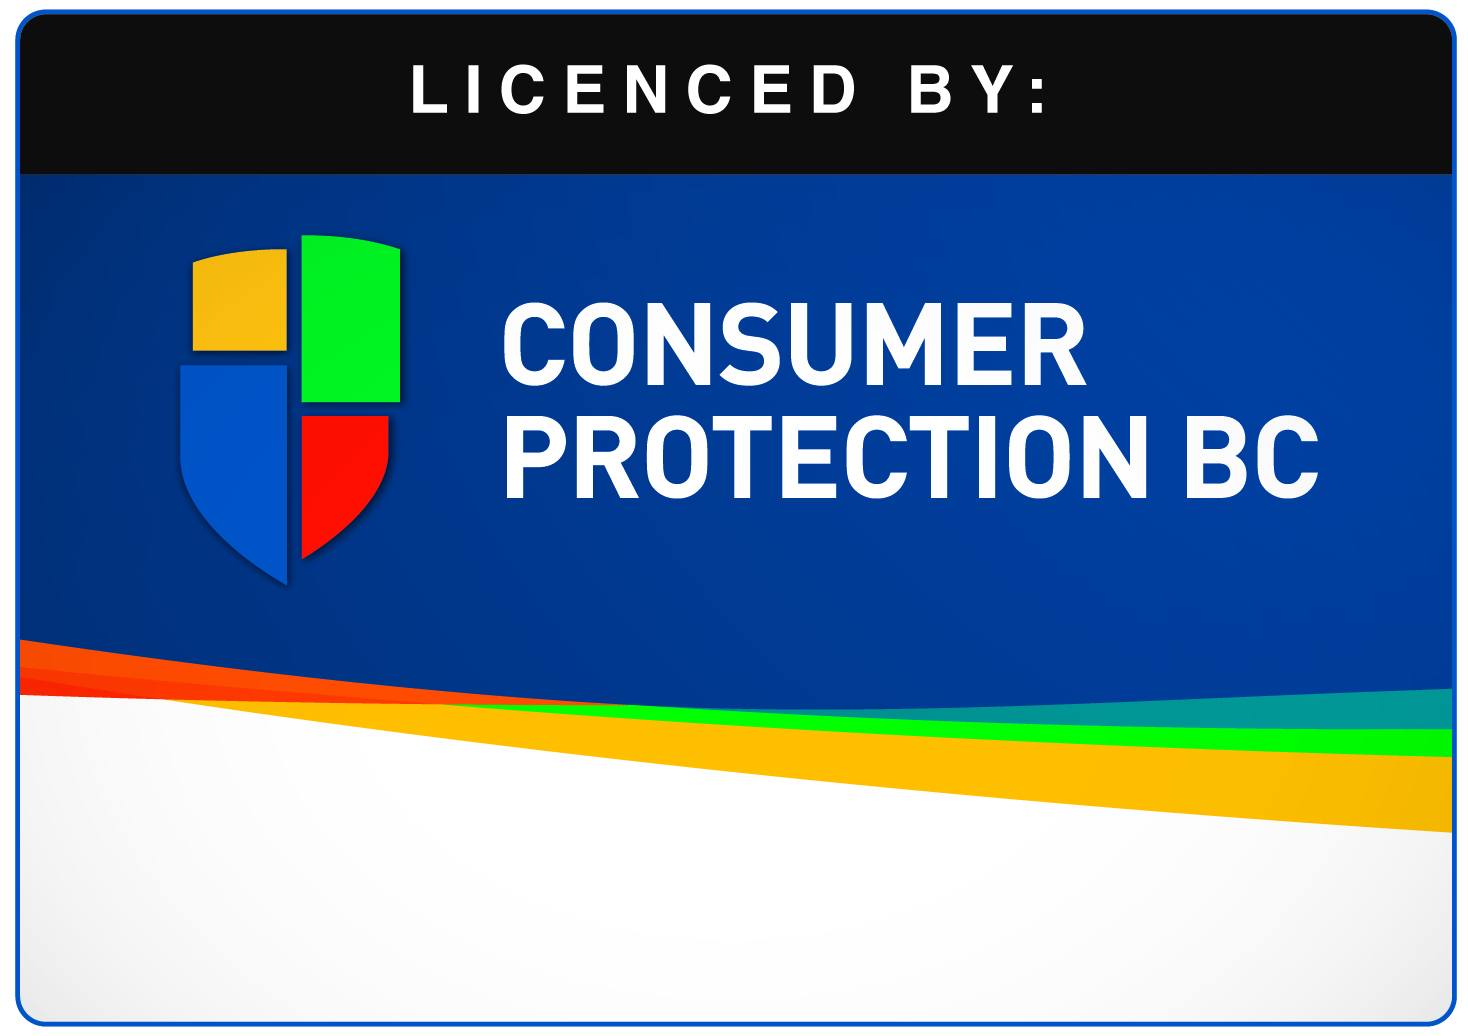 Consumer Protection BC